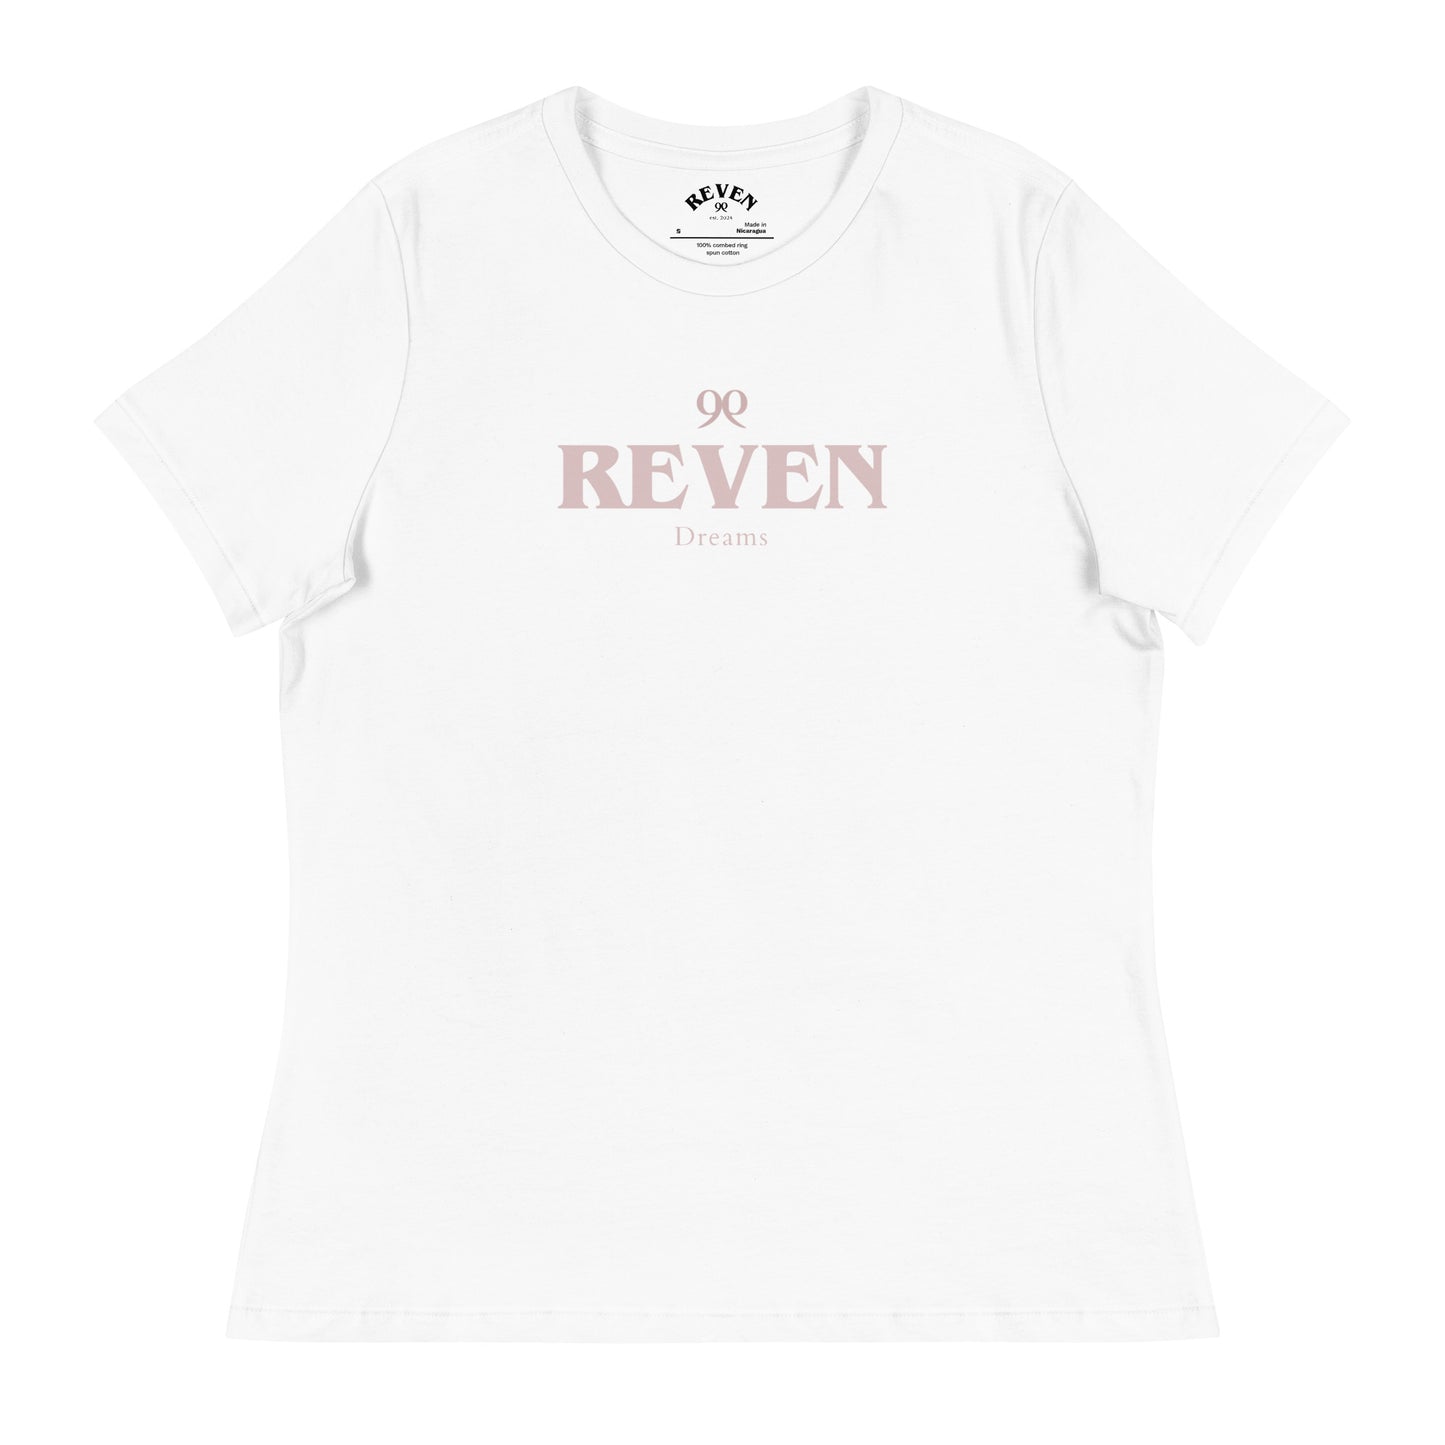 Reven Dreams: Women's T-shirt